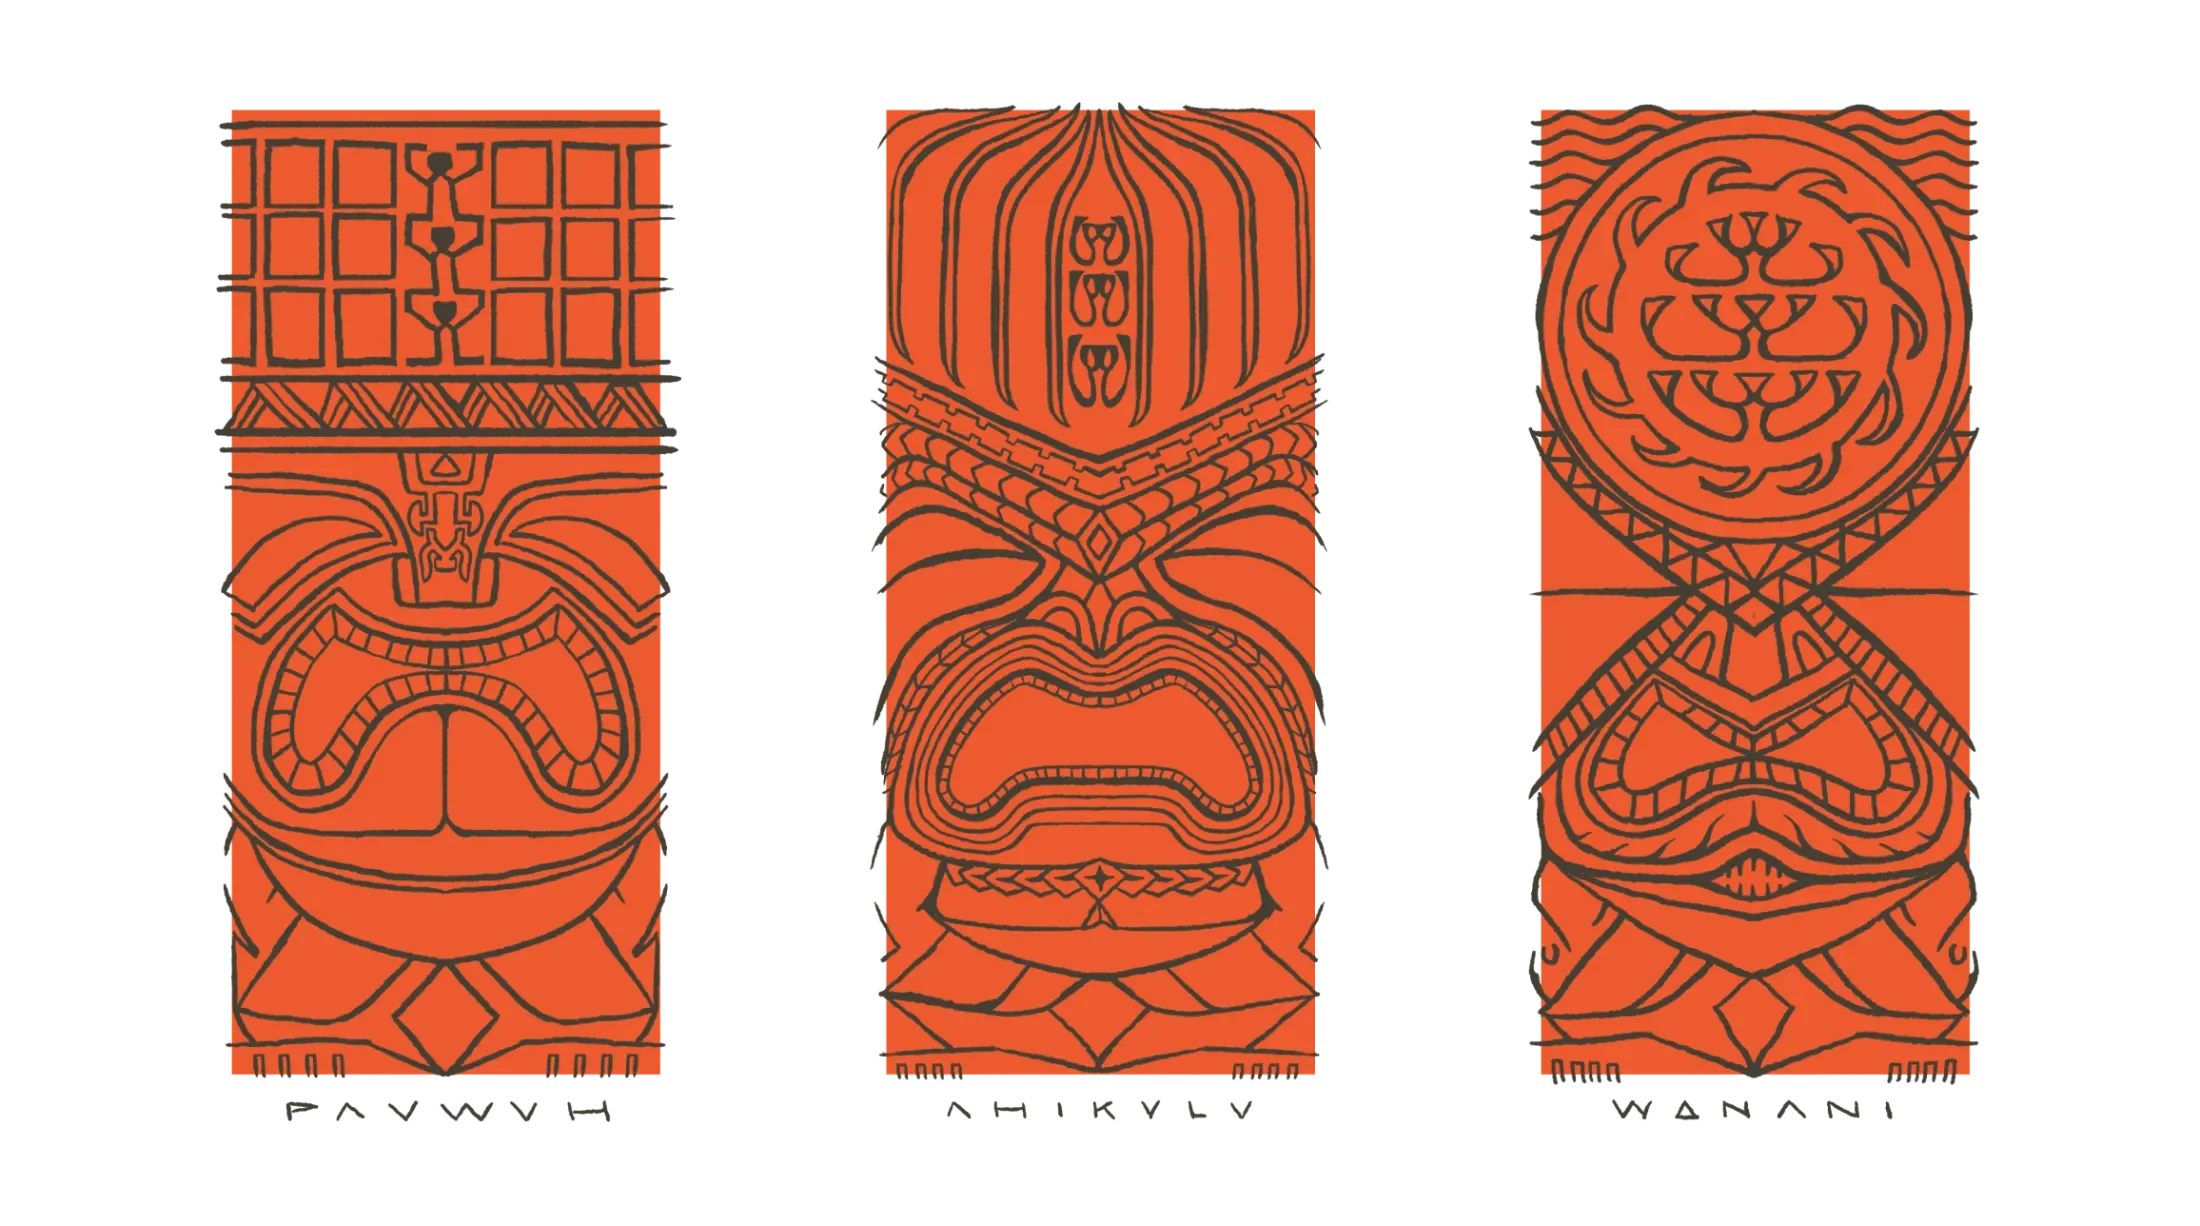 Designs of all three tiki heads